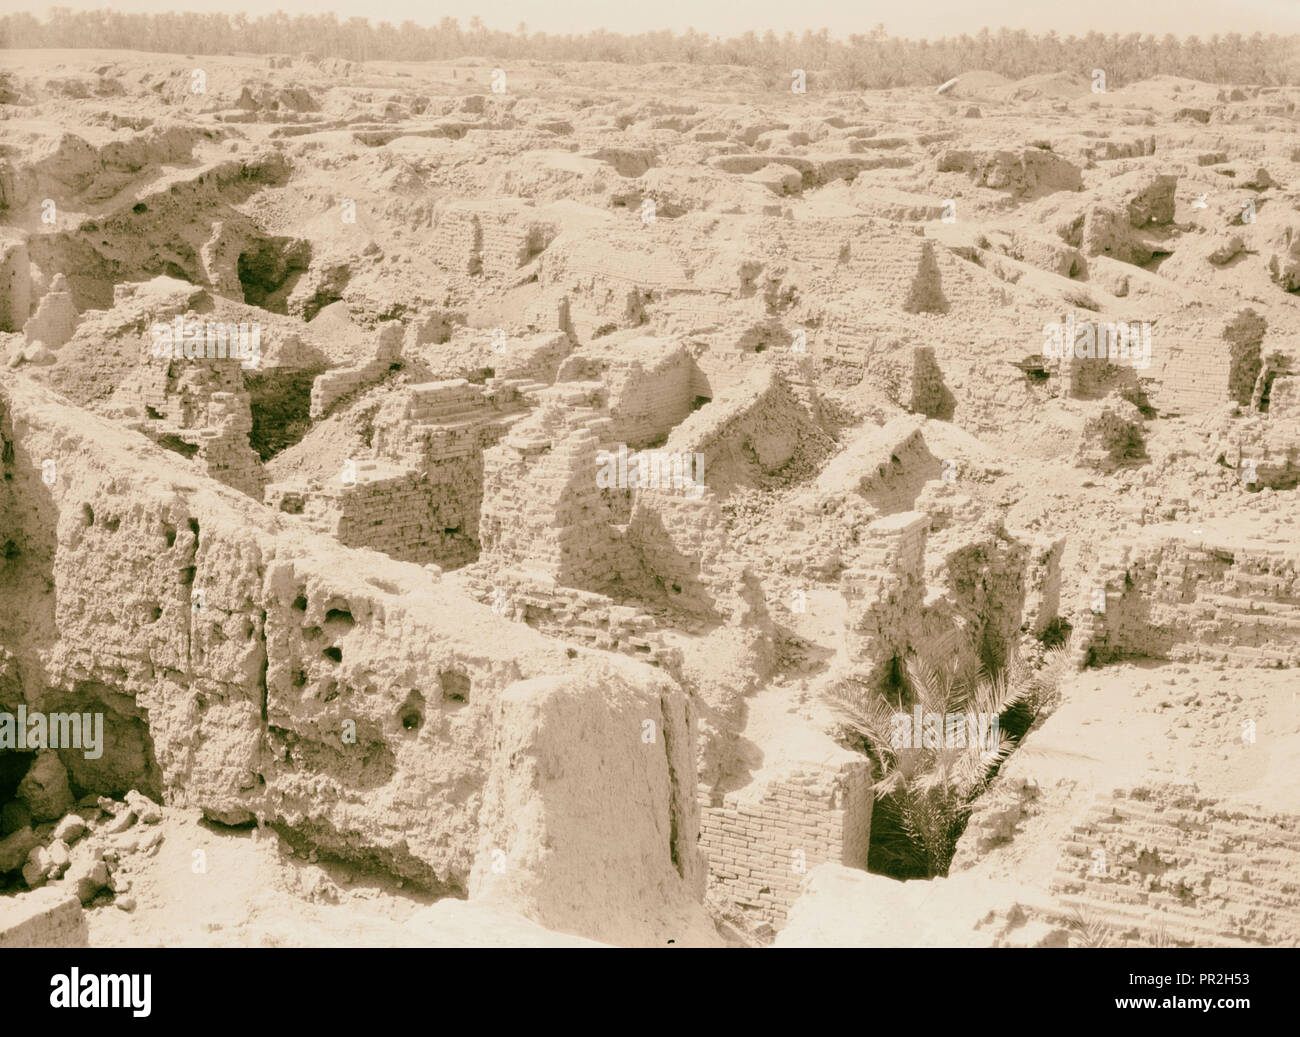 Babilonia. 1932, l'Iraq, Babilonia, estinto city Foto Stock